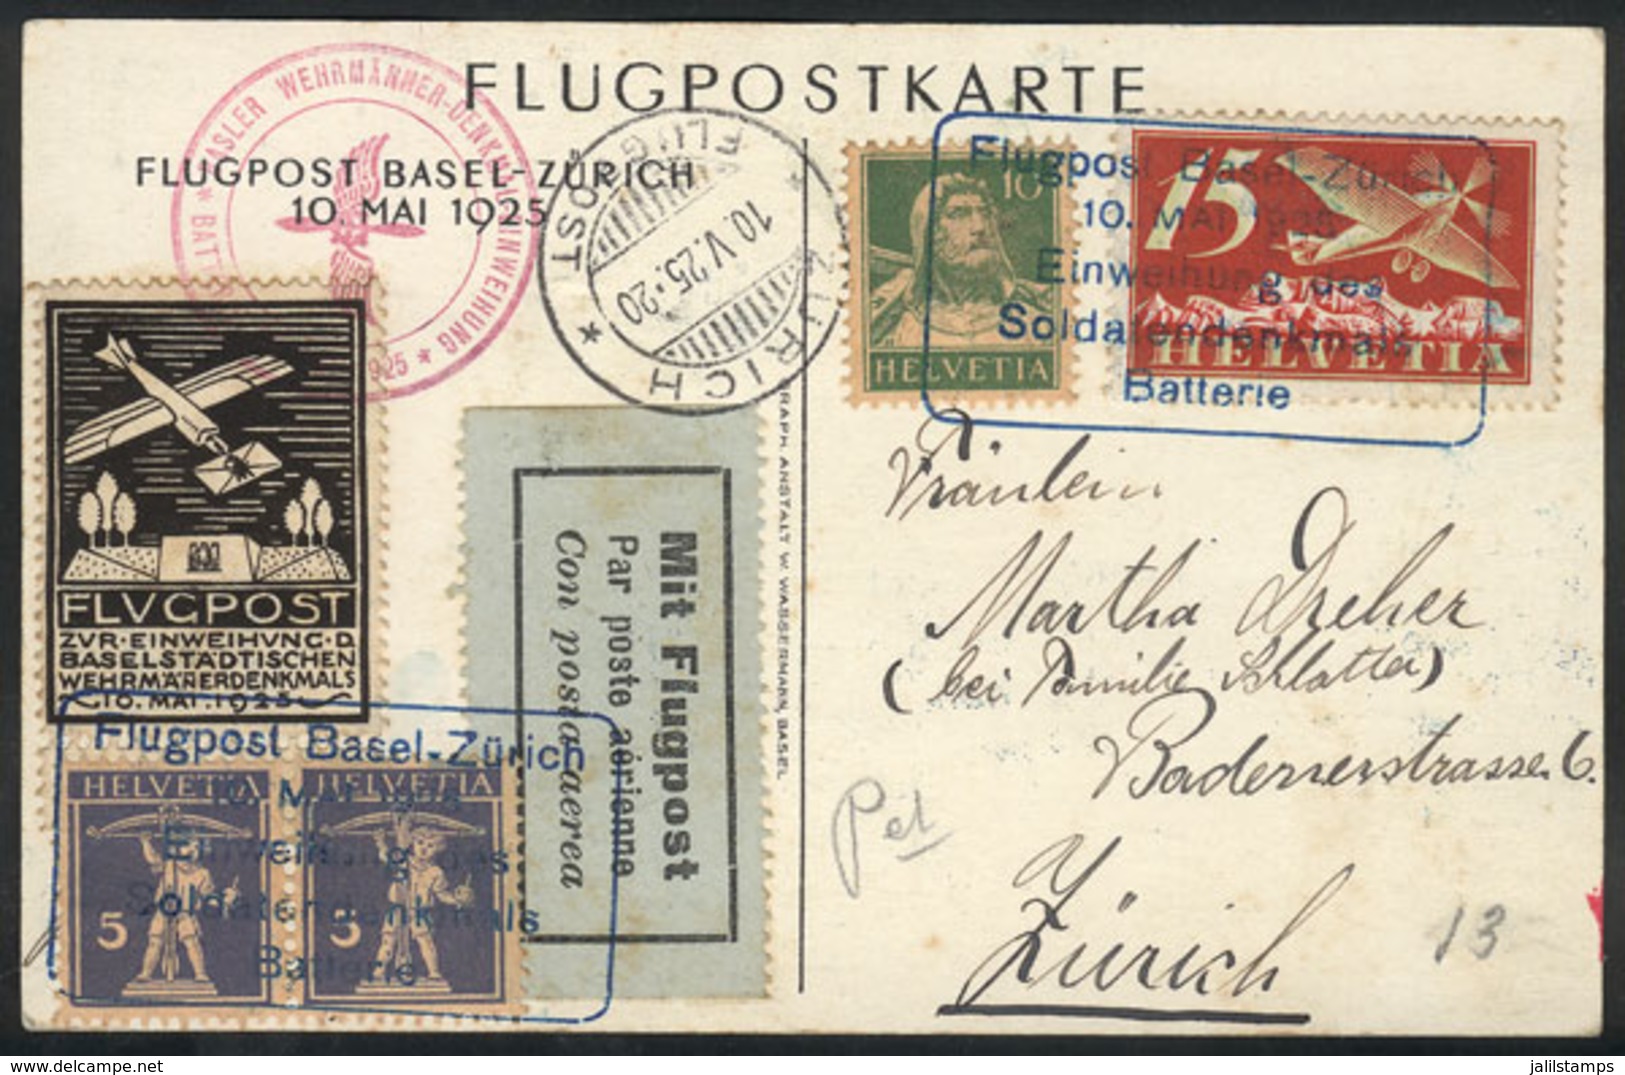 872 SWITZERLAND: 10/MAY/1925 Flight Basel - Zürich, Postcard With Cinderella And Special Cancels, VF Quality! - ...-1845 Préphilatélie